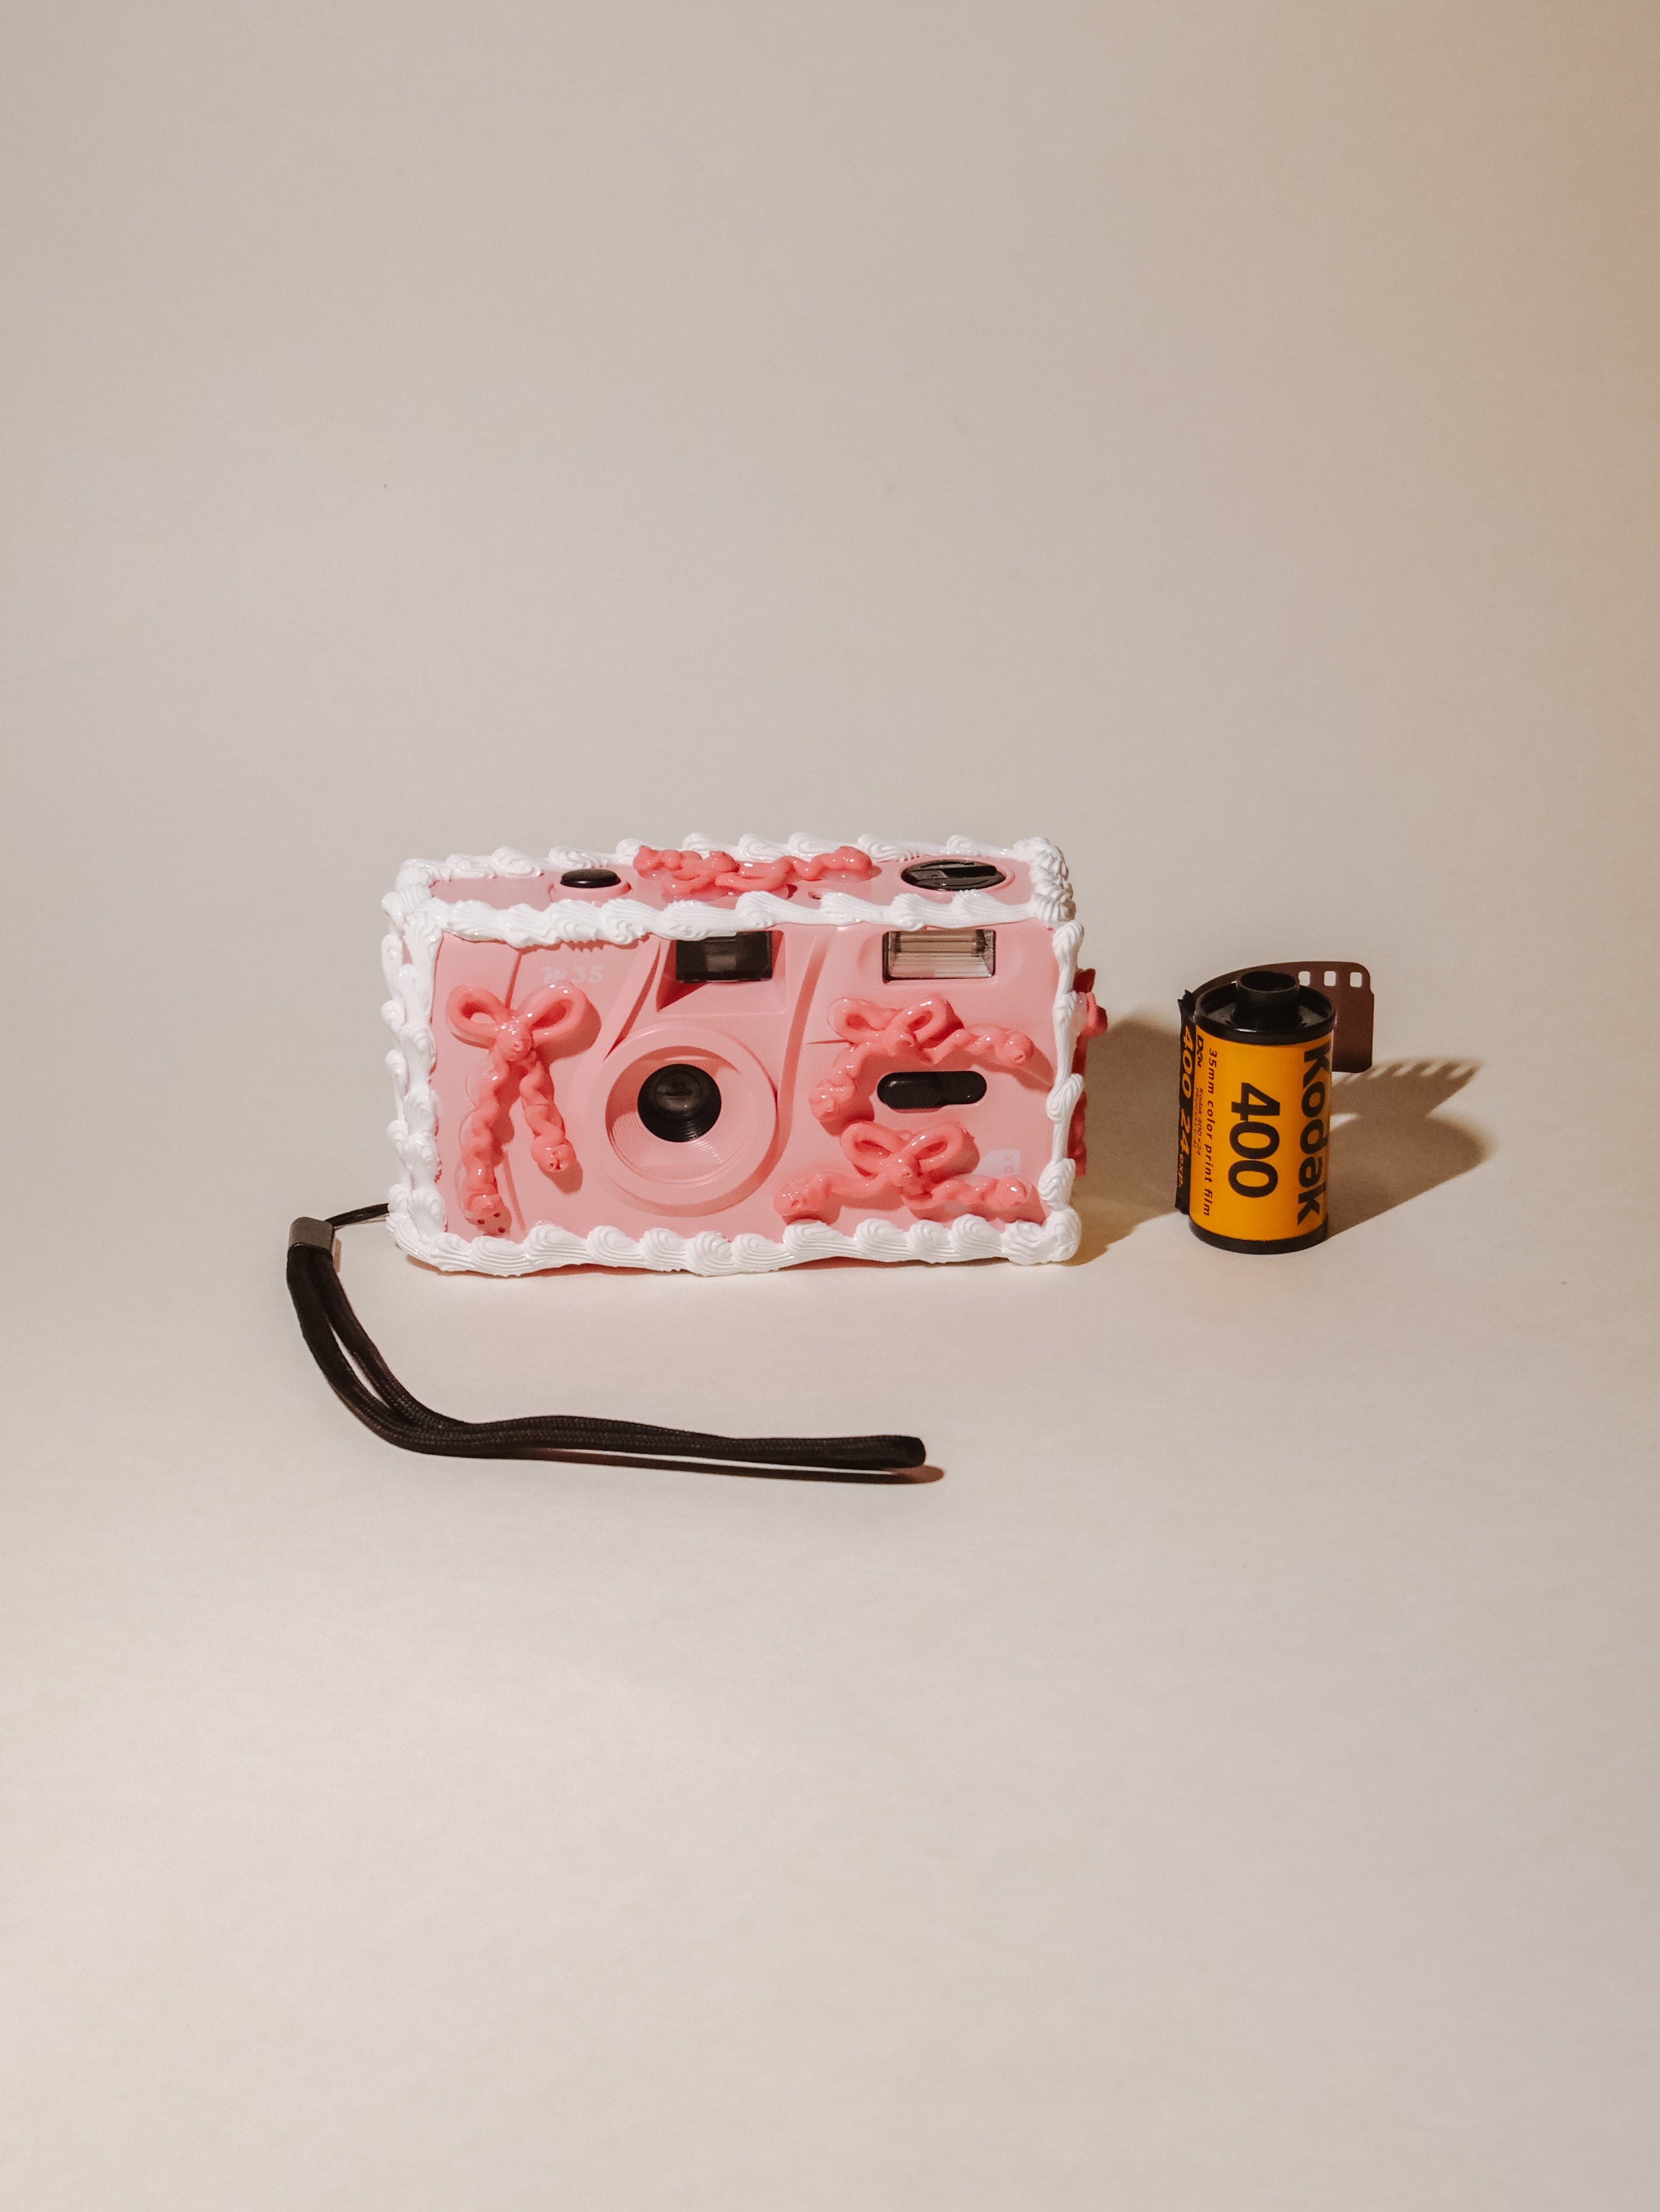 Cake 35mm Film Camera (Pink)